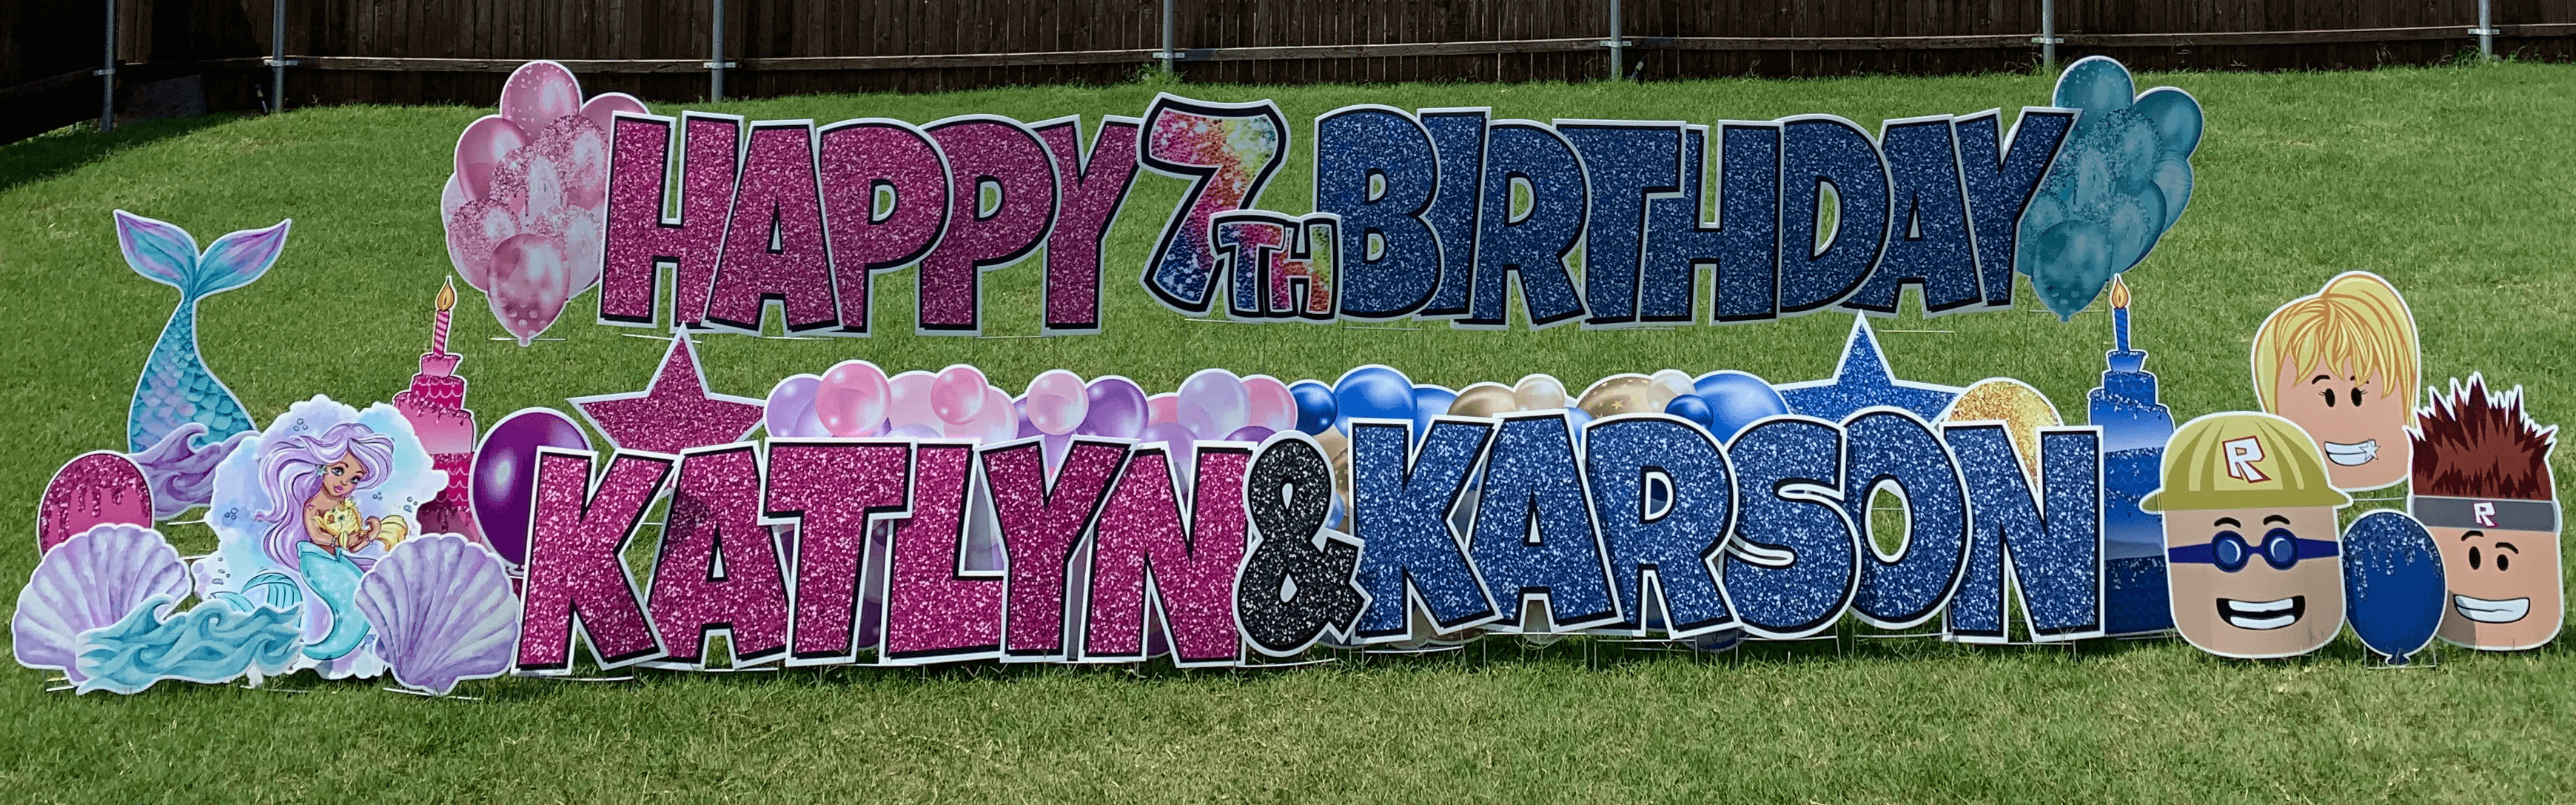 Yard card sign happy birthday twinskatlynkarson 